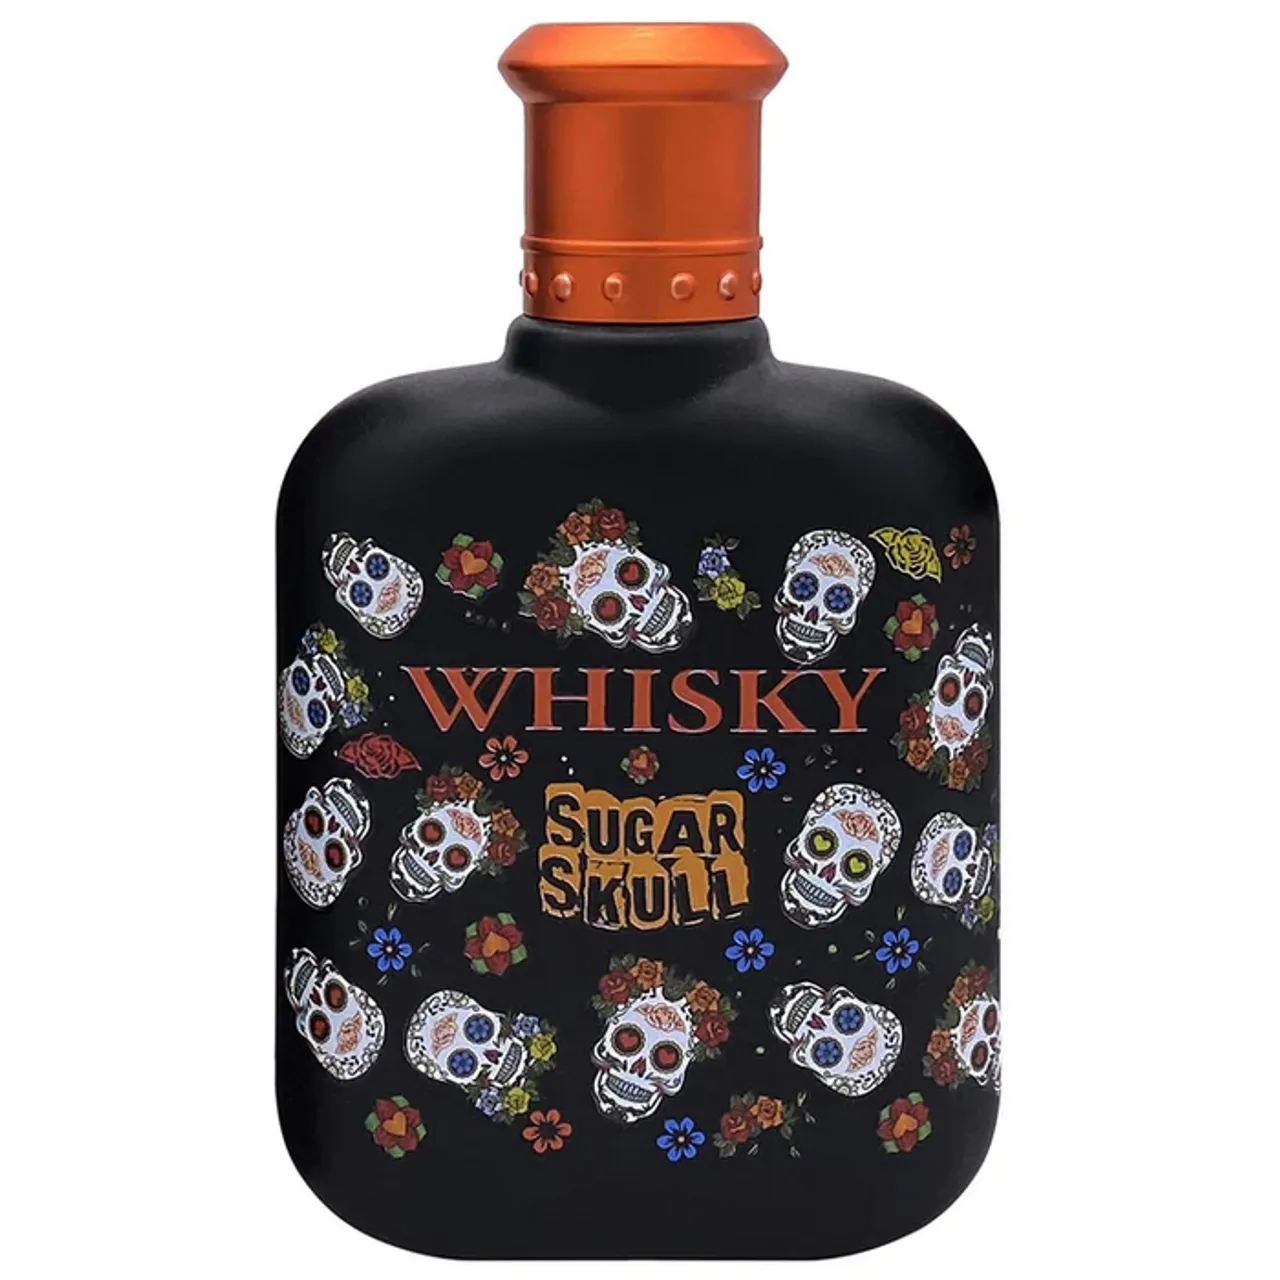 Whisky Sugar Skull eau de toilette spray 100 ml